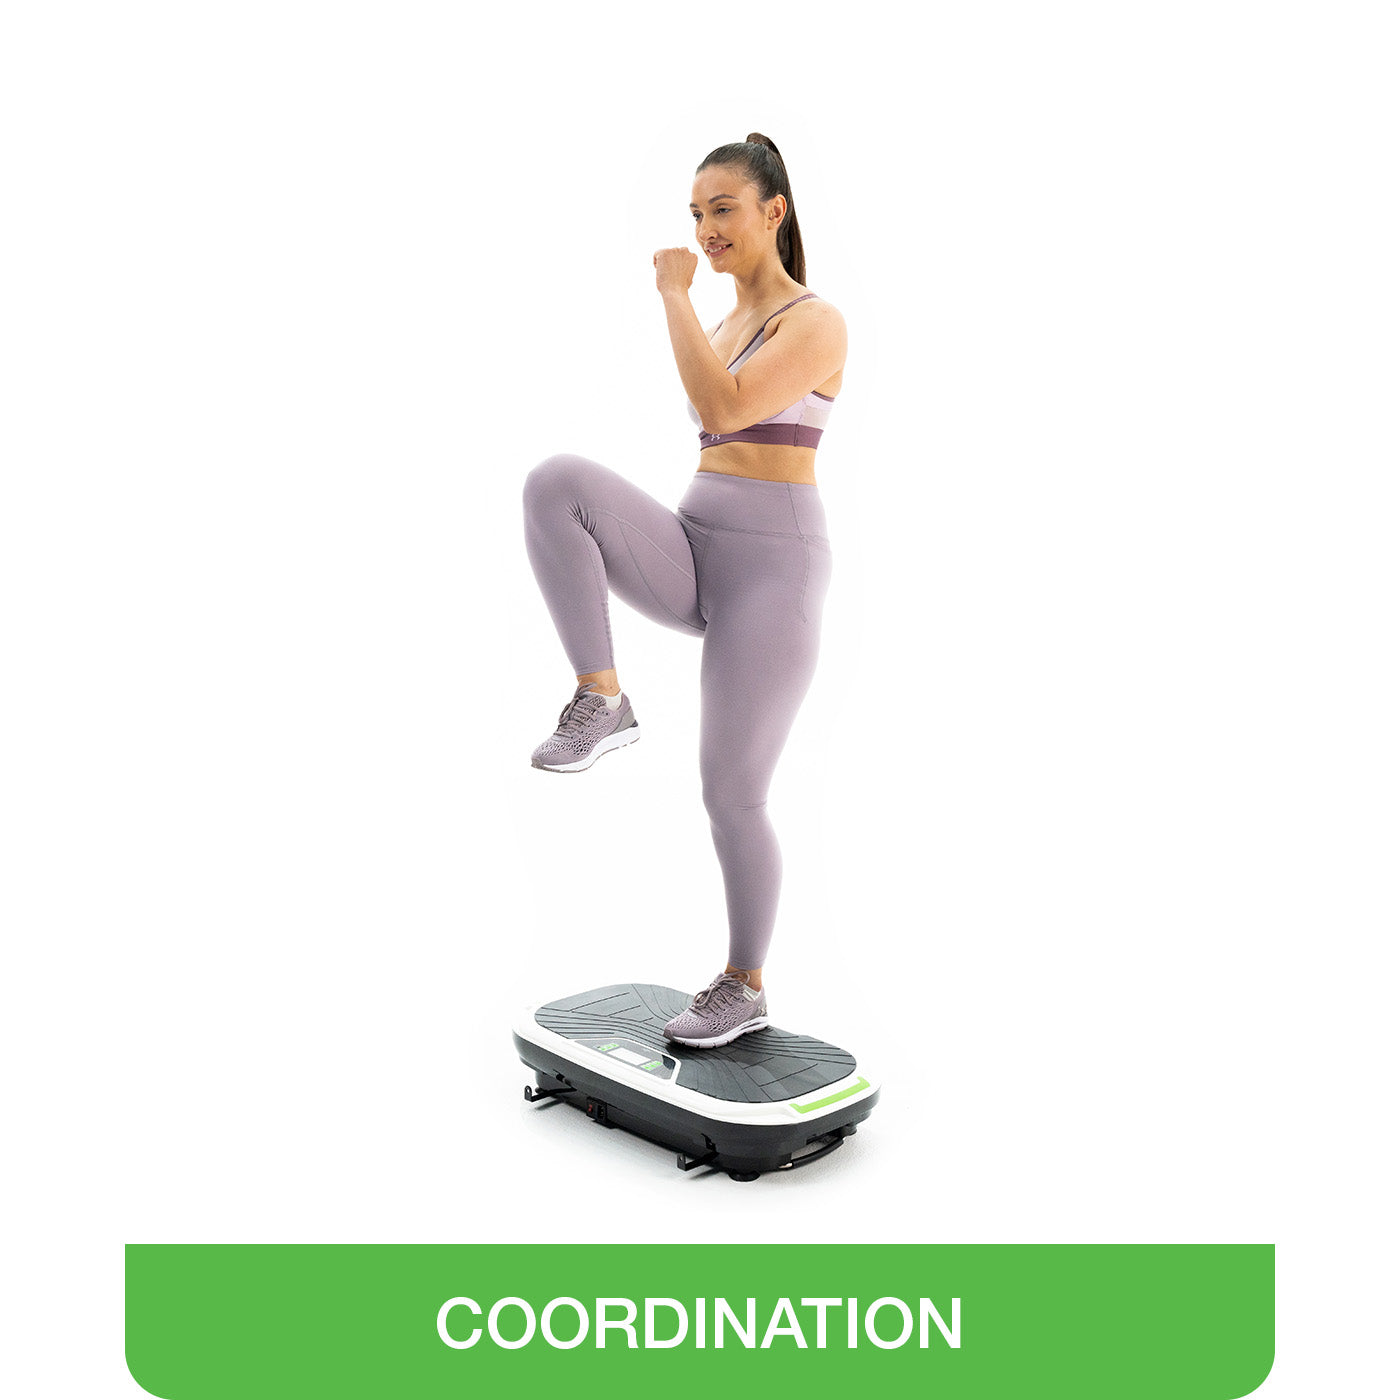 woman doing coordination exercise on vibrating exercise machine